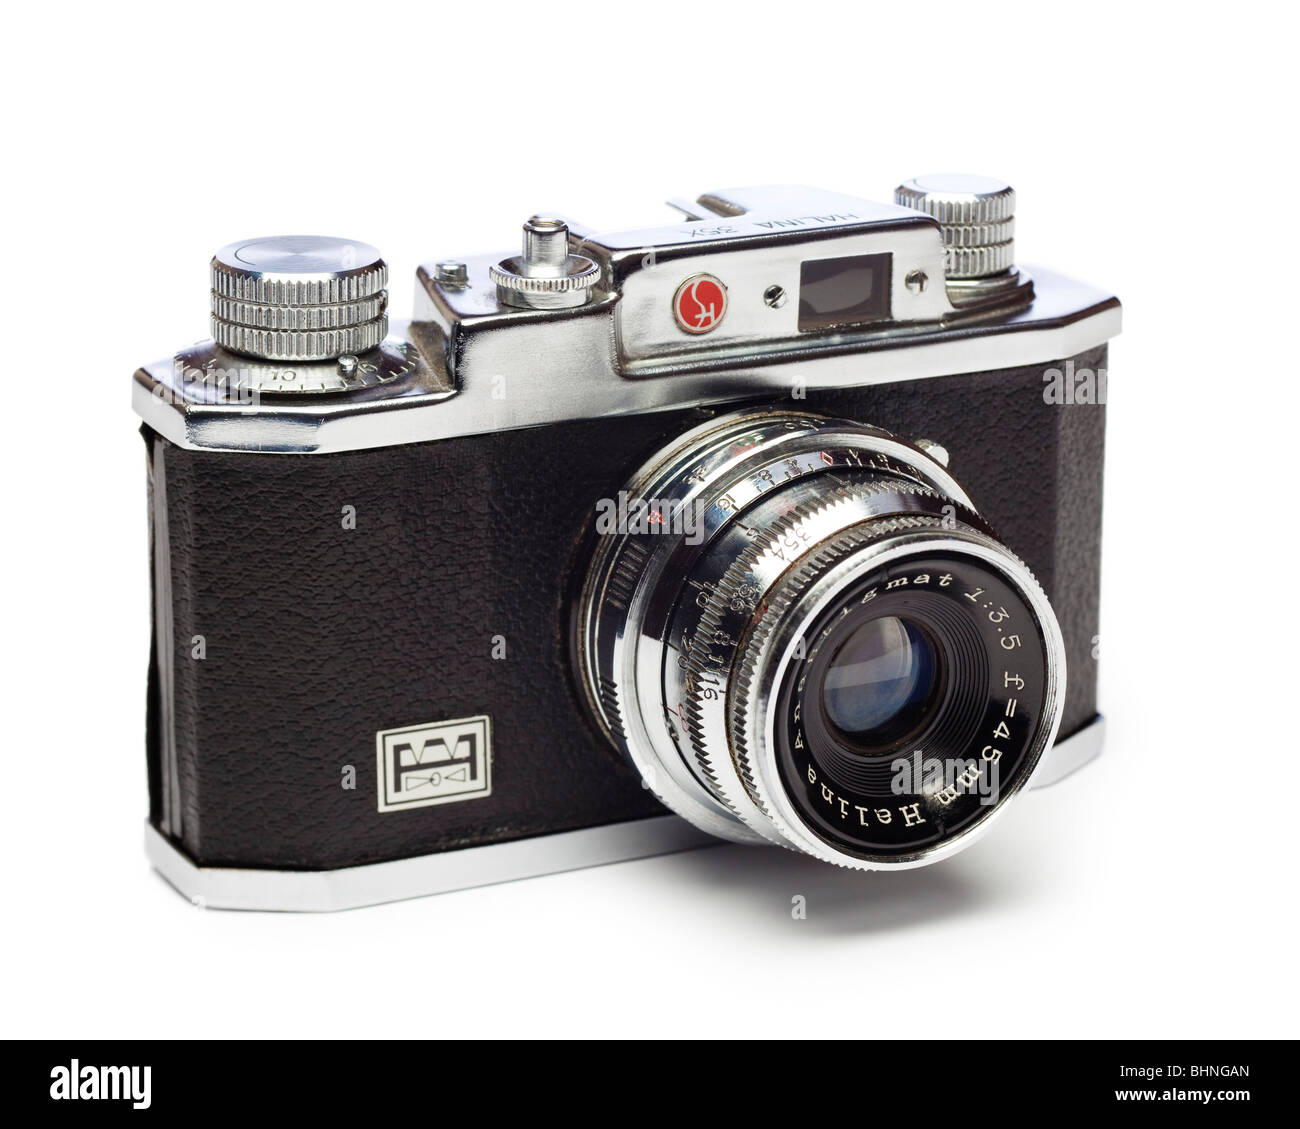 Alte vintage Kamera - Halina 35x Entfernungsmesser film Kamera Stockfoto